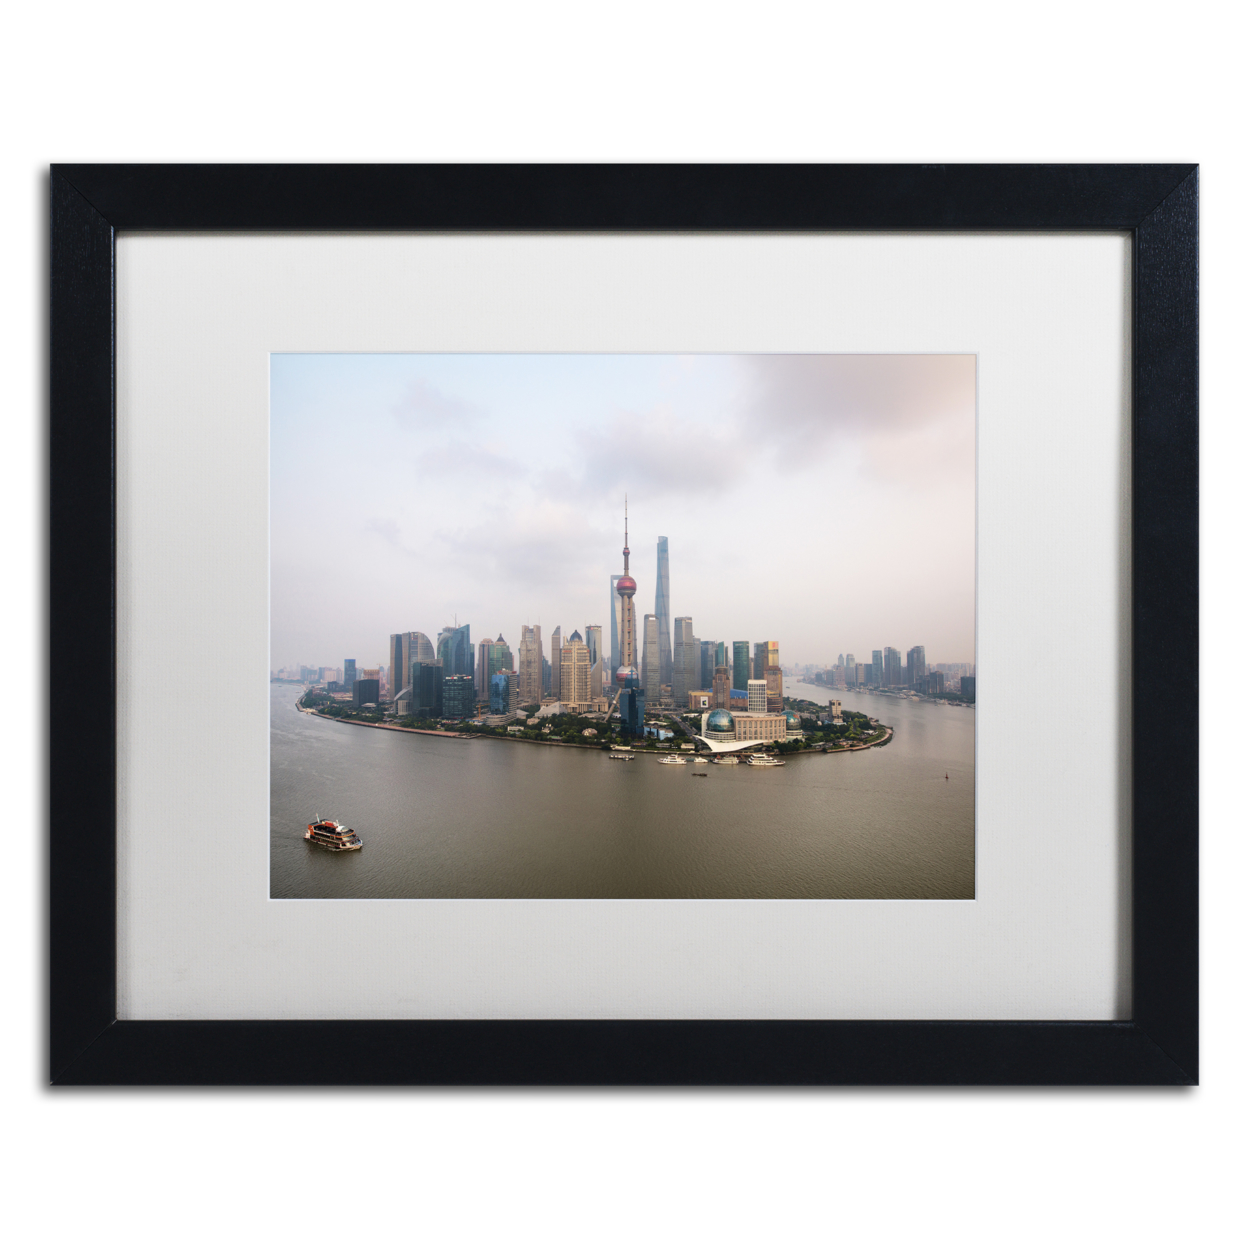 Philippe Hugonnard 'Shanghai' Black Wooden Framed Art 18 X 22 Inches